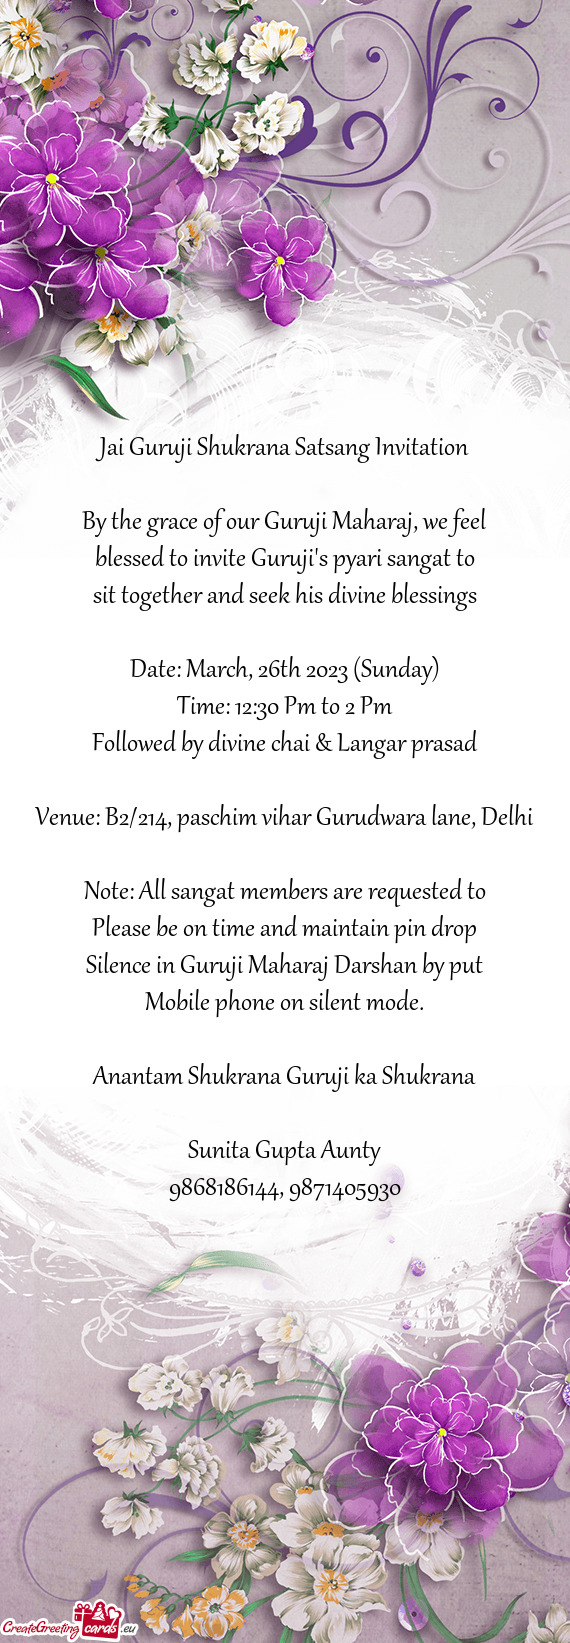 Jai Guruji Shukrana Satsang Invitation